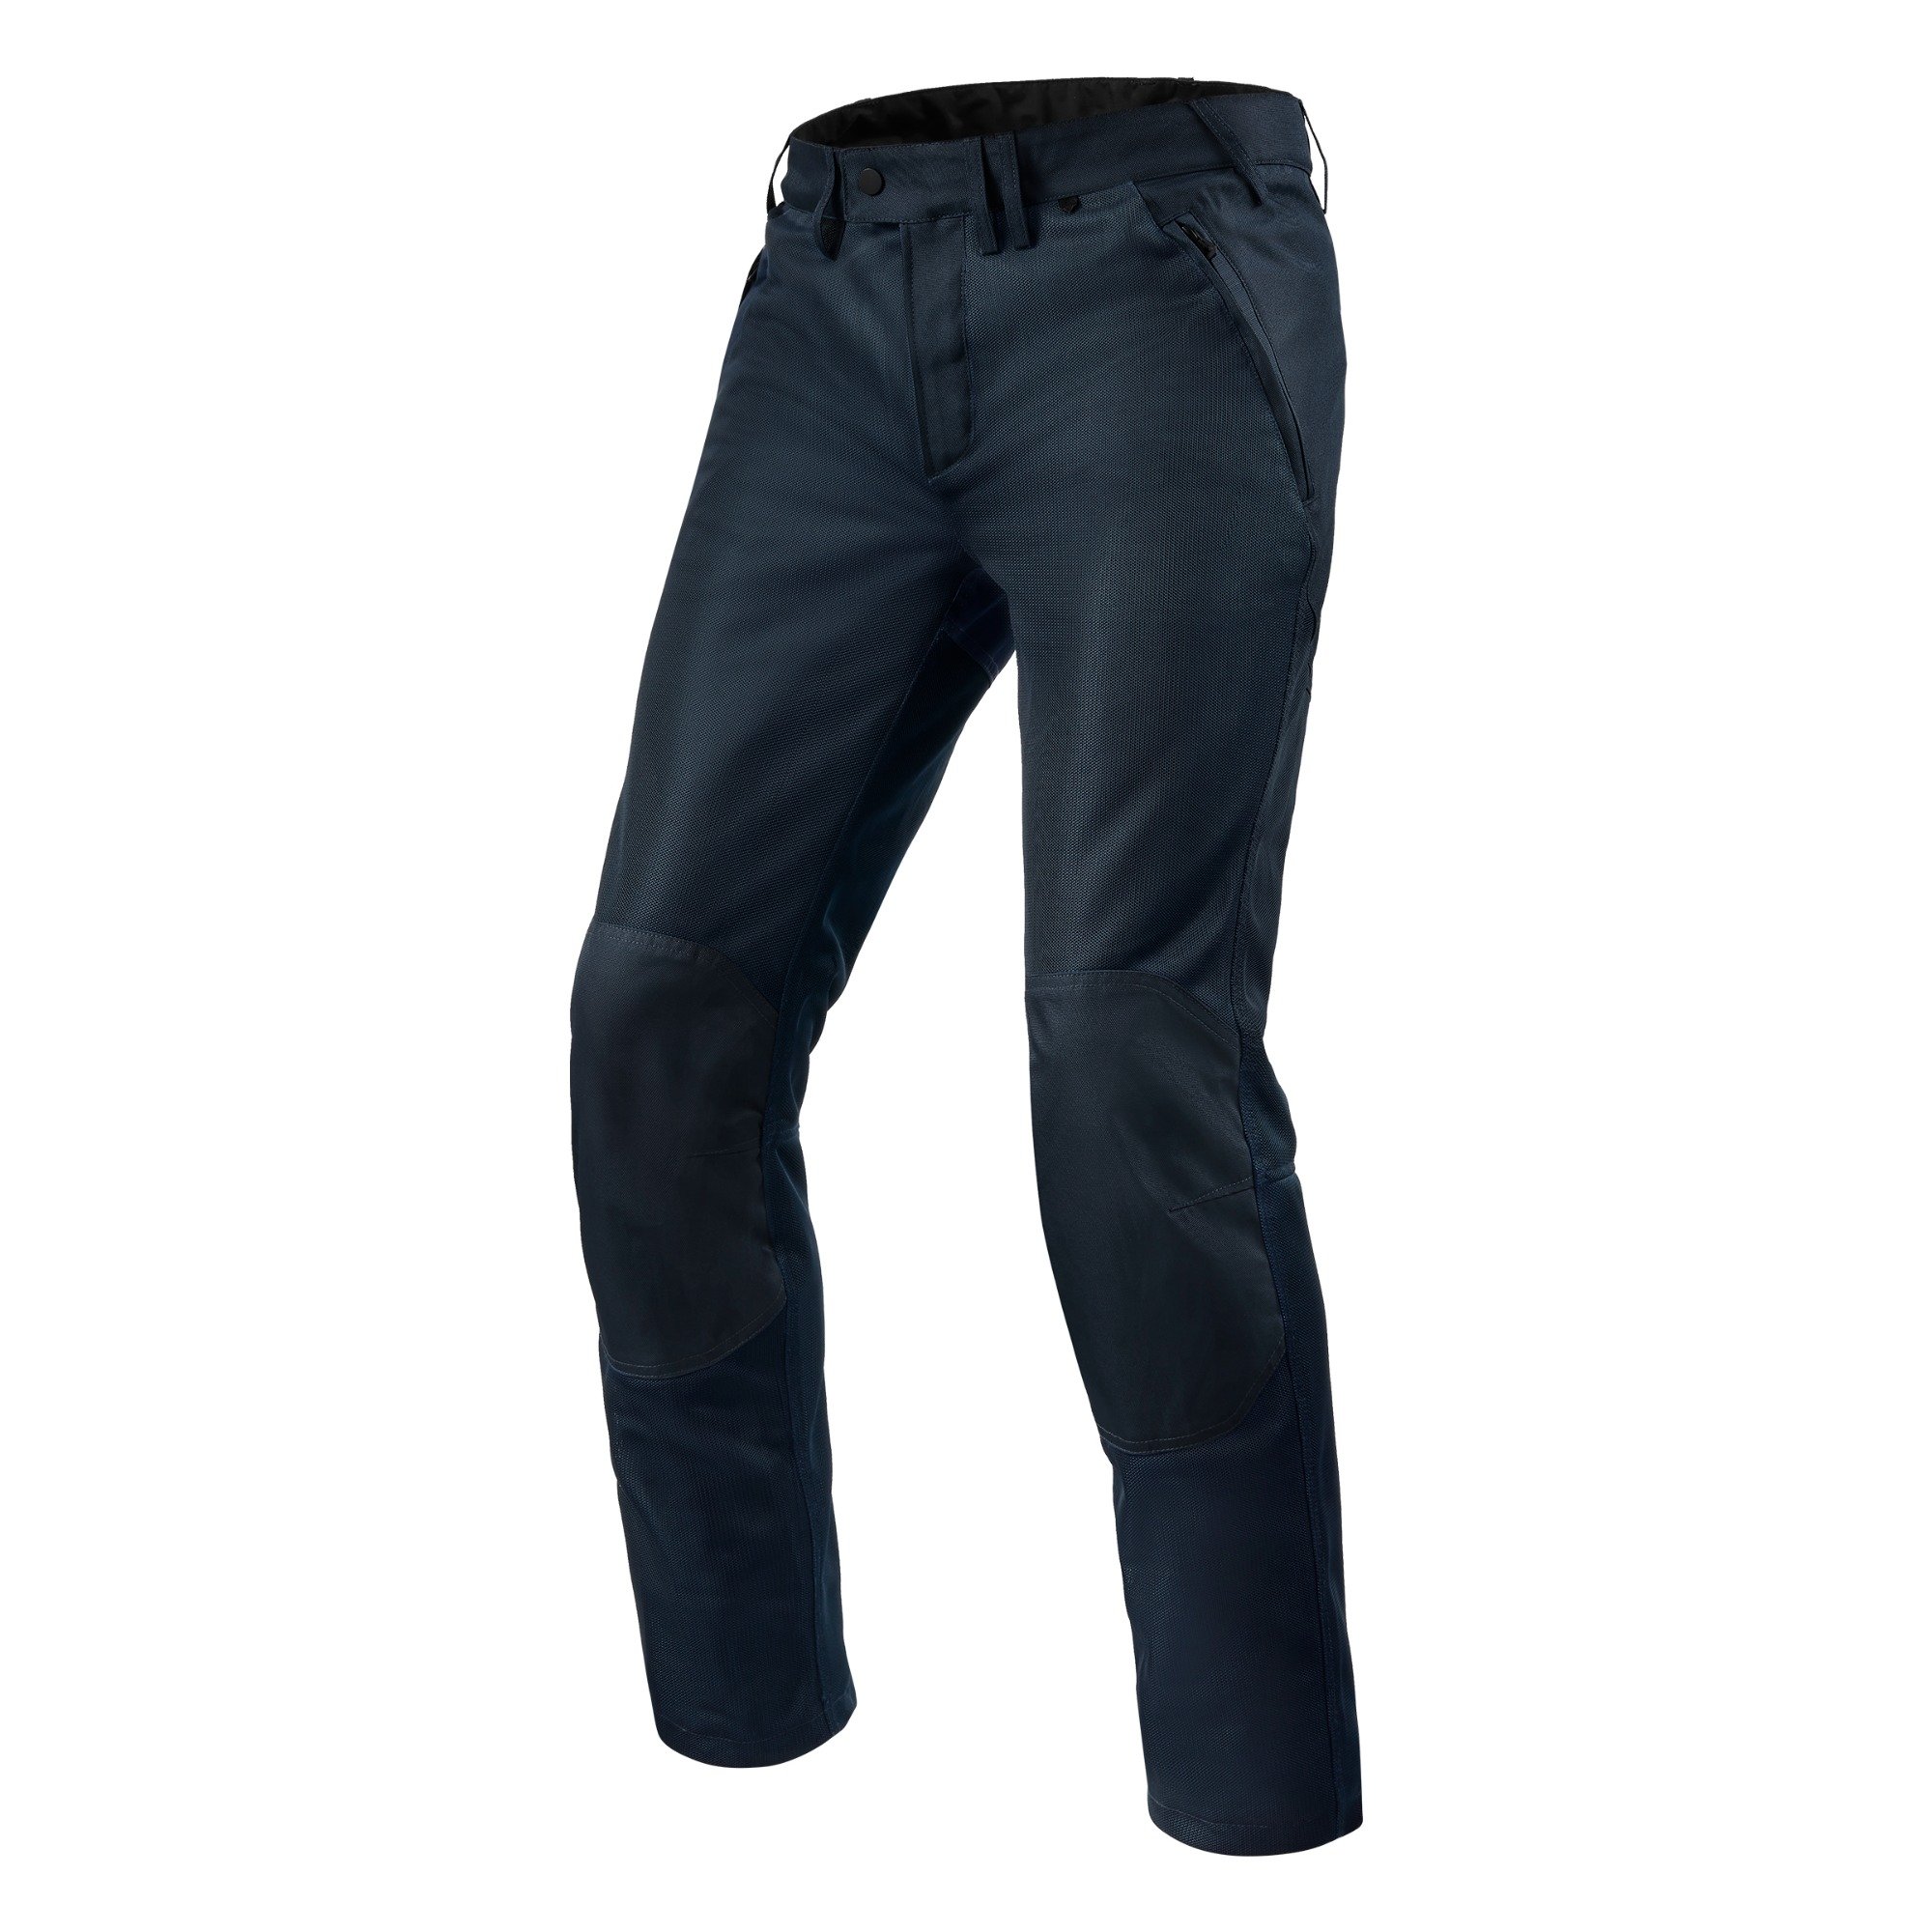 Image of REV'IT! Pants Eclipse 2 Dark Blue Long Motorcycle Pants Size 3XL ID 8700001369114